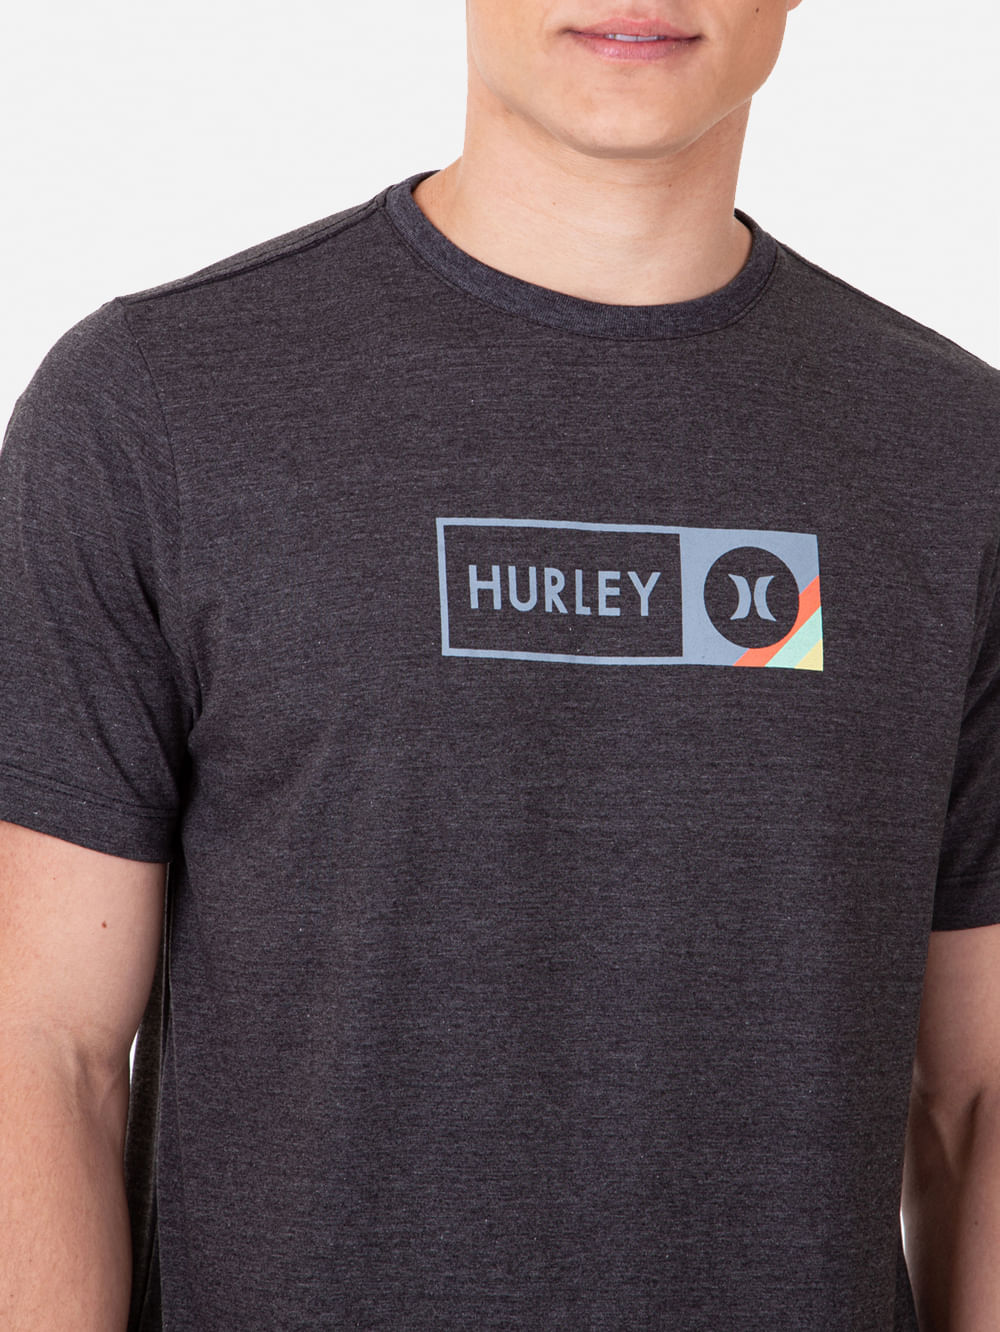 Camiseta Hurley Inbox Mescla Preto